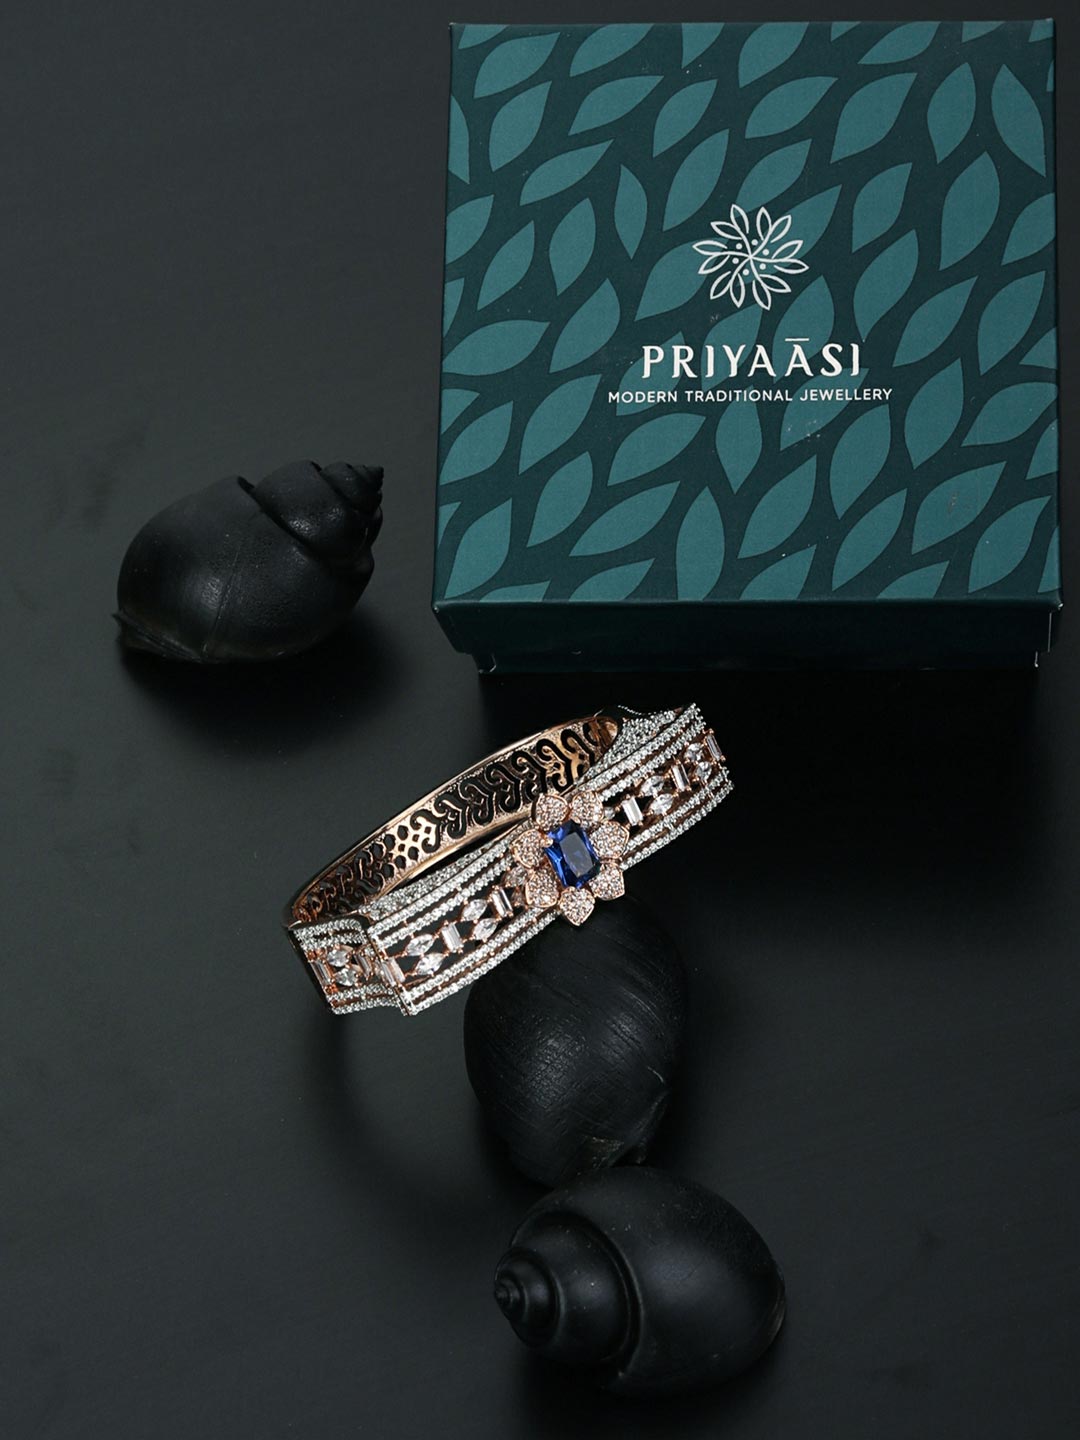 Blue Stones American Diamond Rose Gold Plated Bracelet